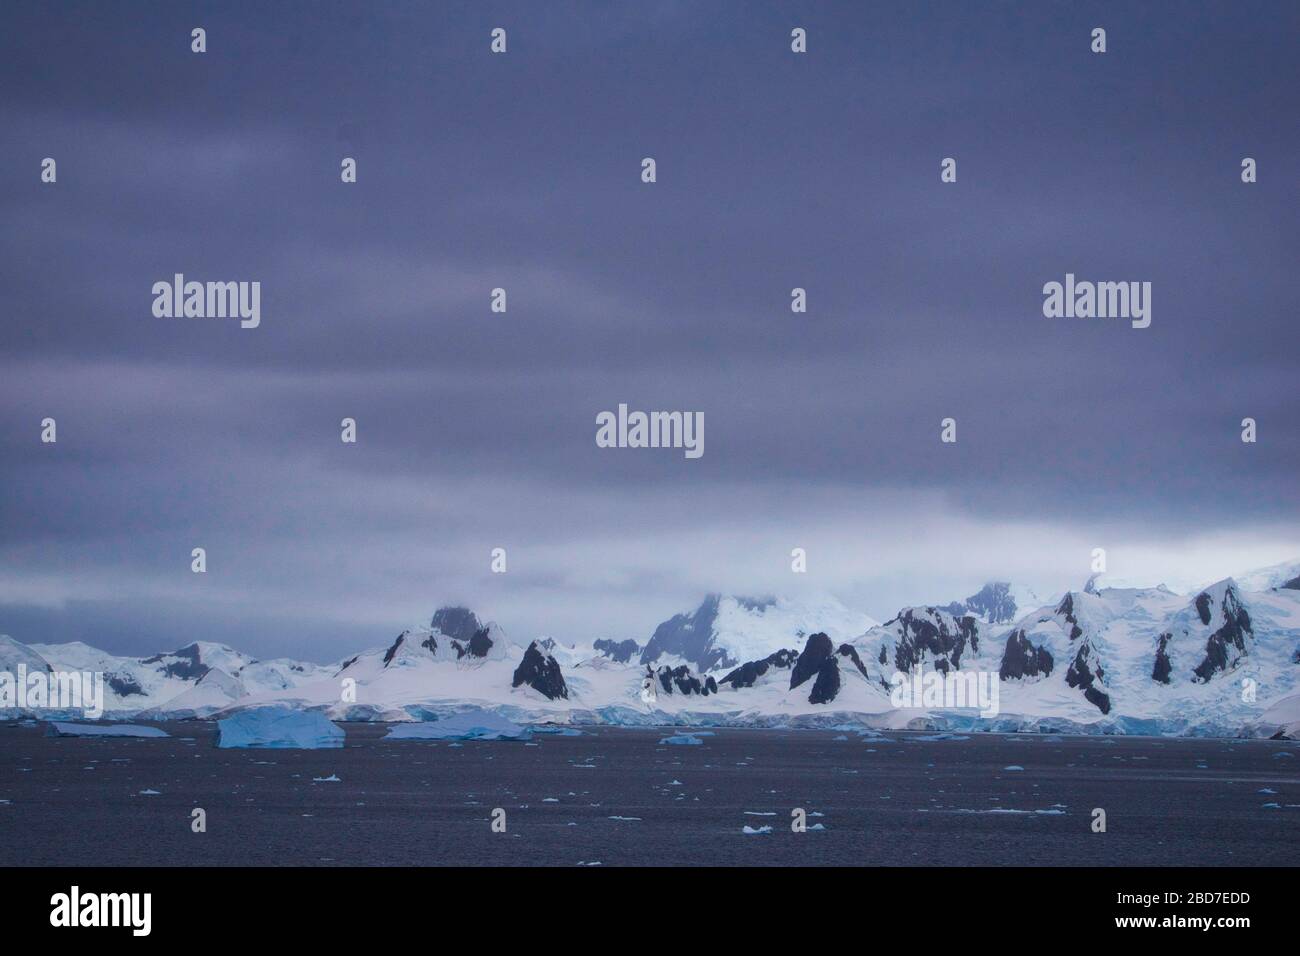 Antarctic Landscape on the Peninsula Stock Photo